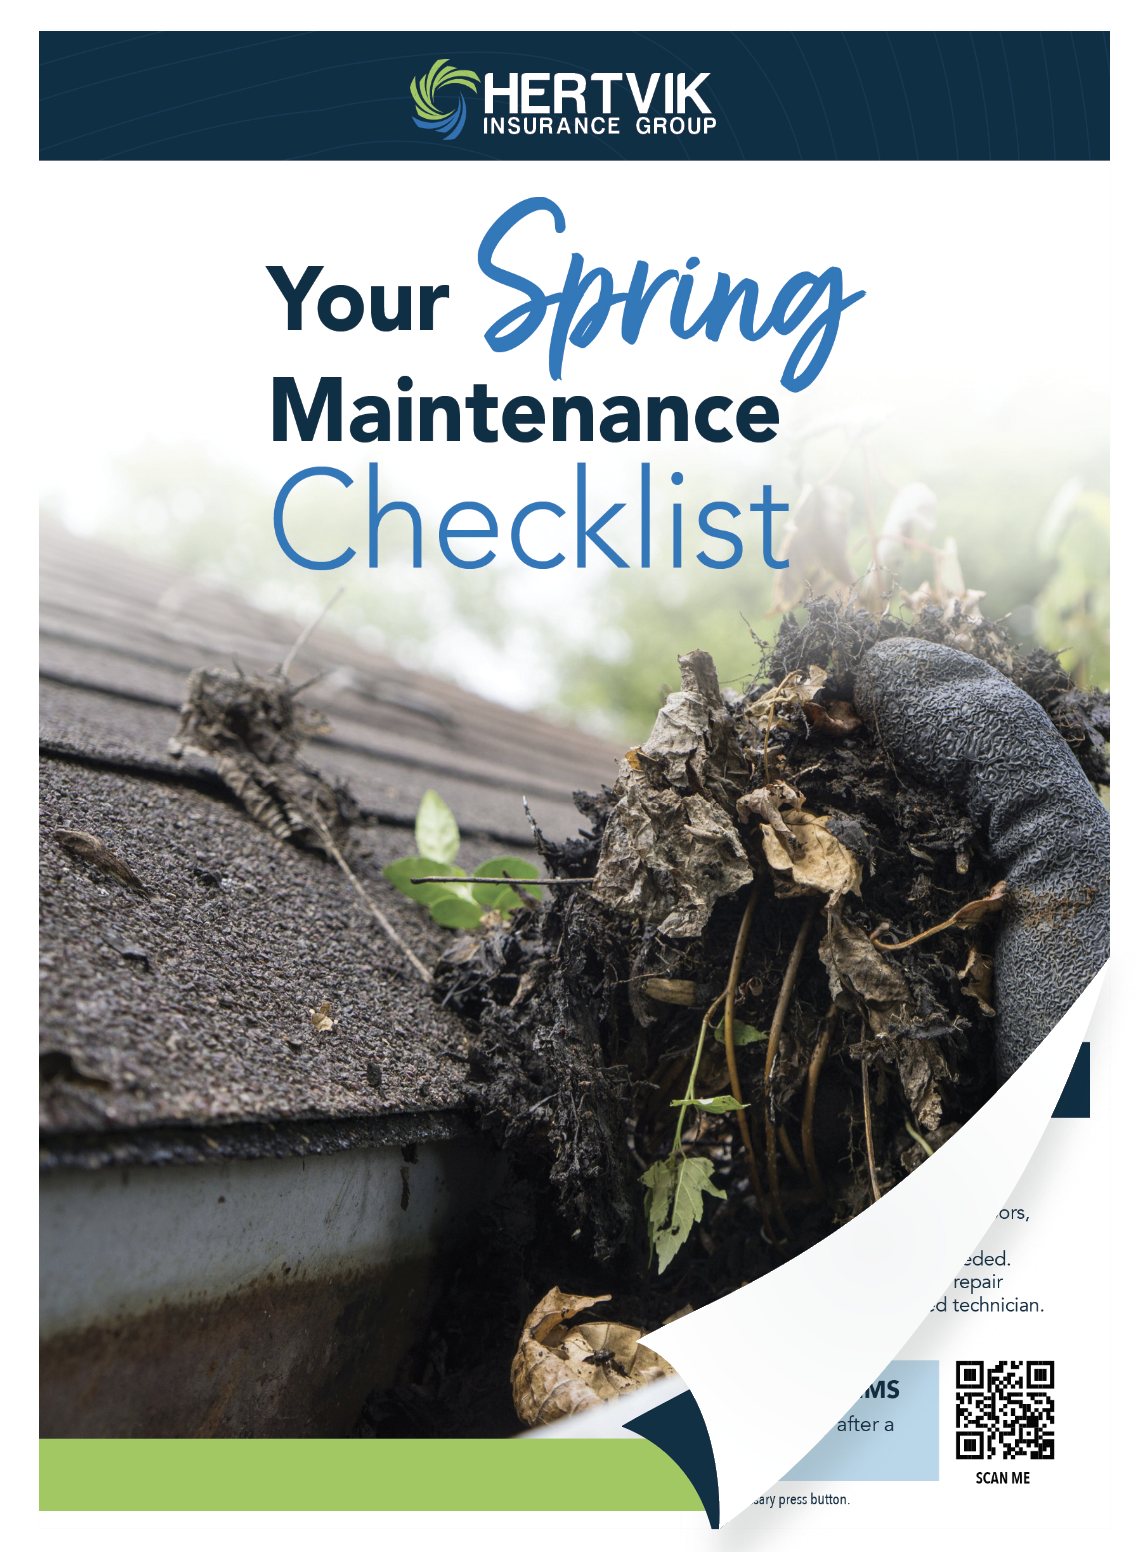 Hertvik Spring Maintenance Checklist